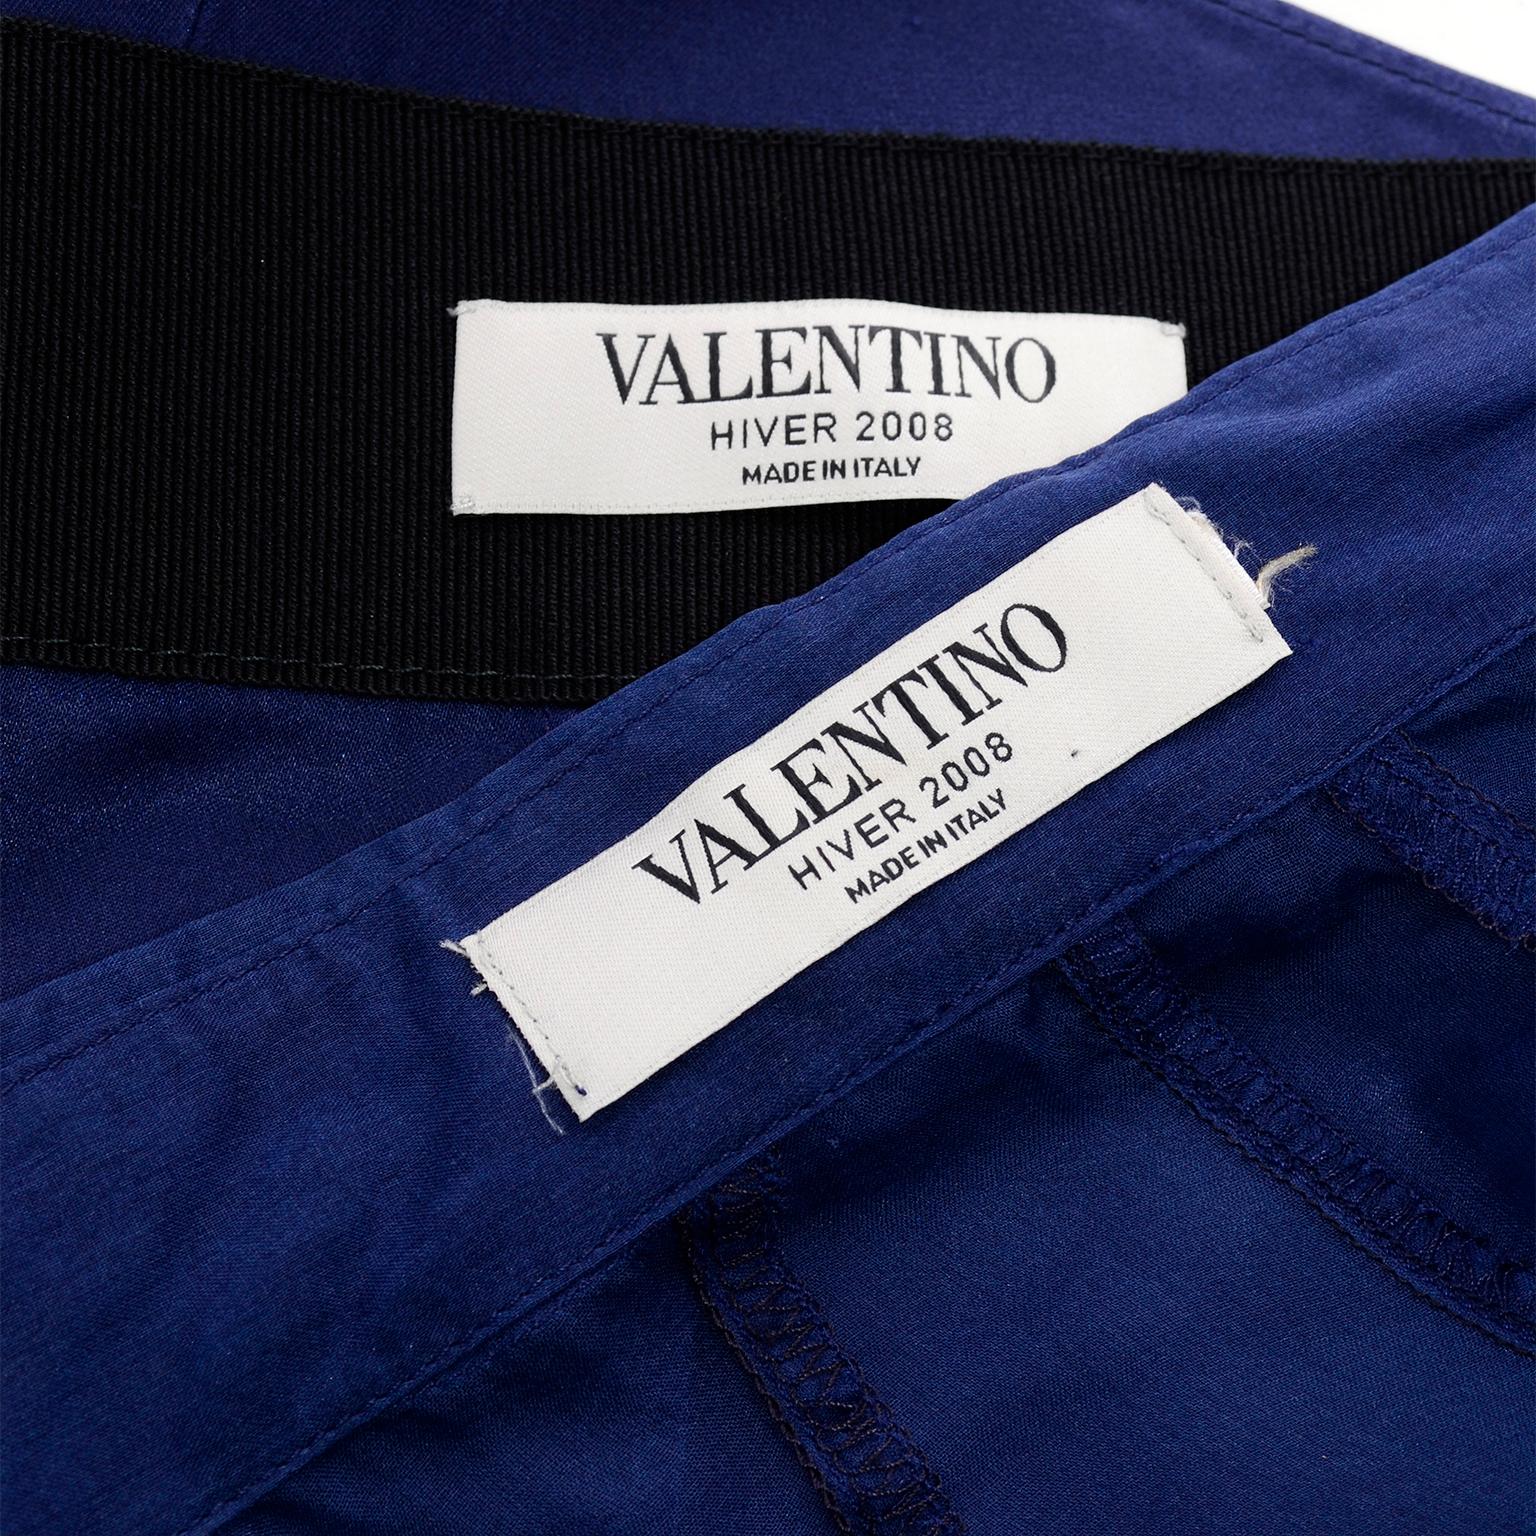 Valentino Fall Winter 2008 Runway Sheer Blouse & Skirt in Blue Silk & Organza 6